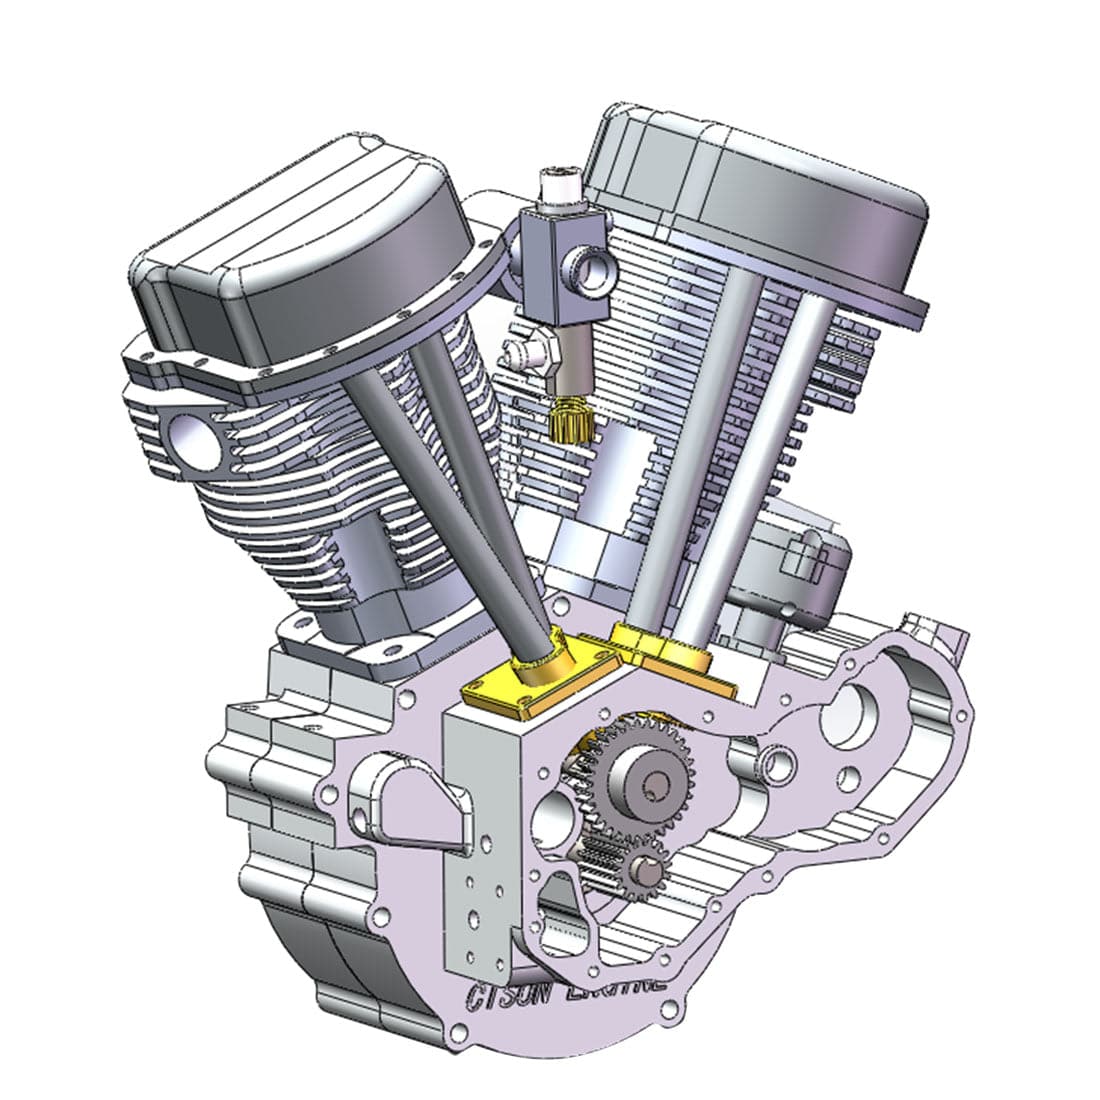 CISON FG-VT9 9cc V-twin V2 Engine Four-stroke Air-cooled Motorcycle RC Gasoline Engine 2